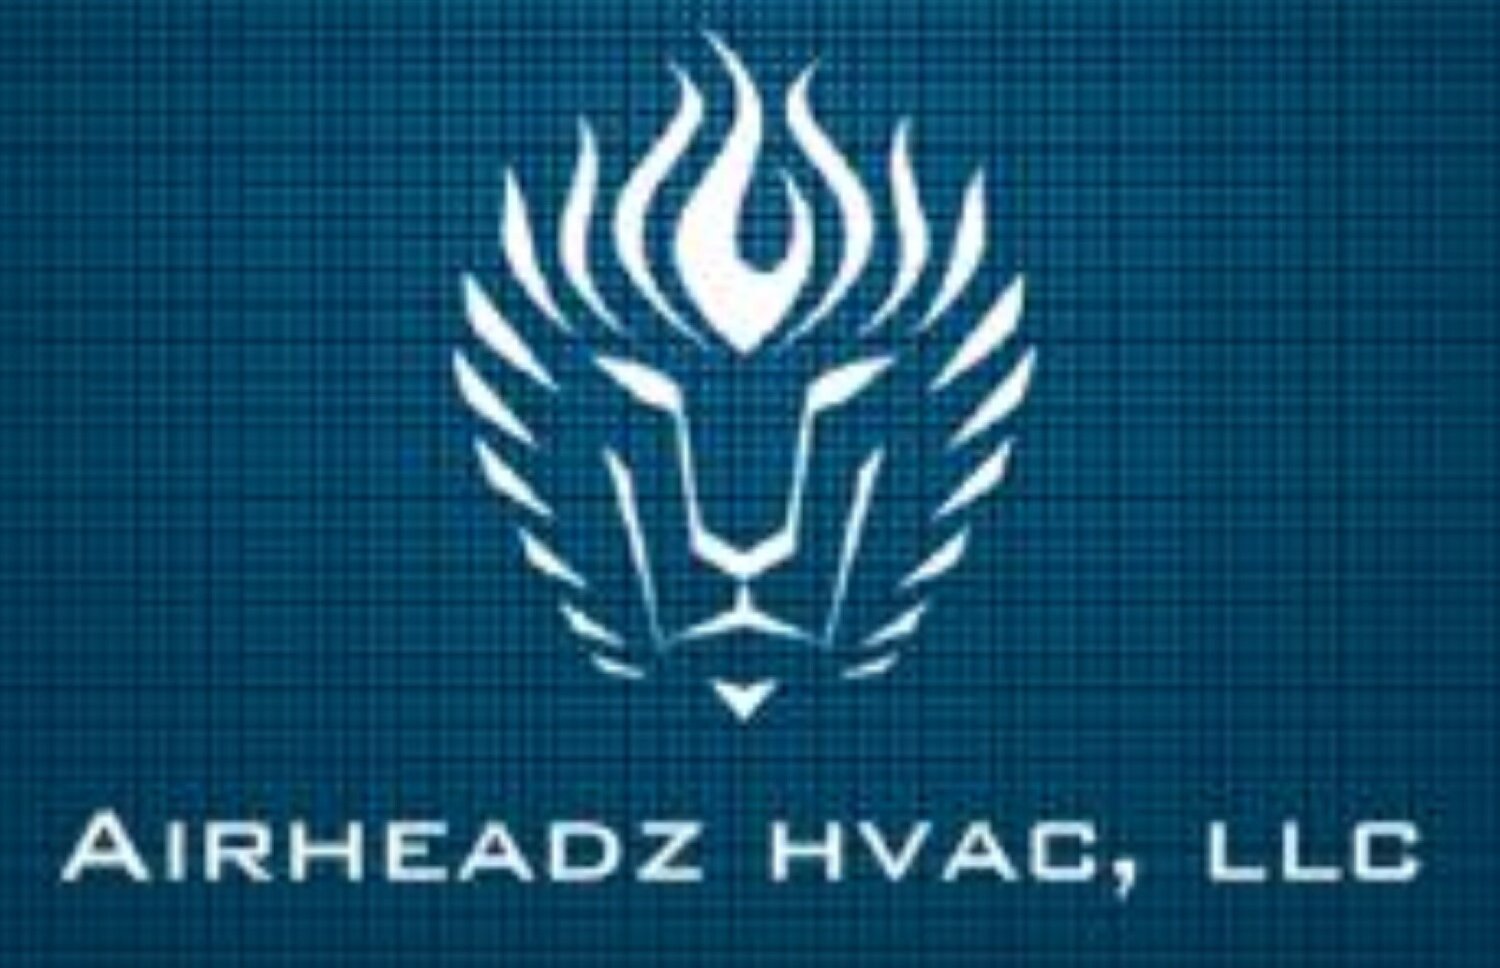 Airheadz HVAC llc